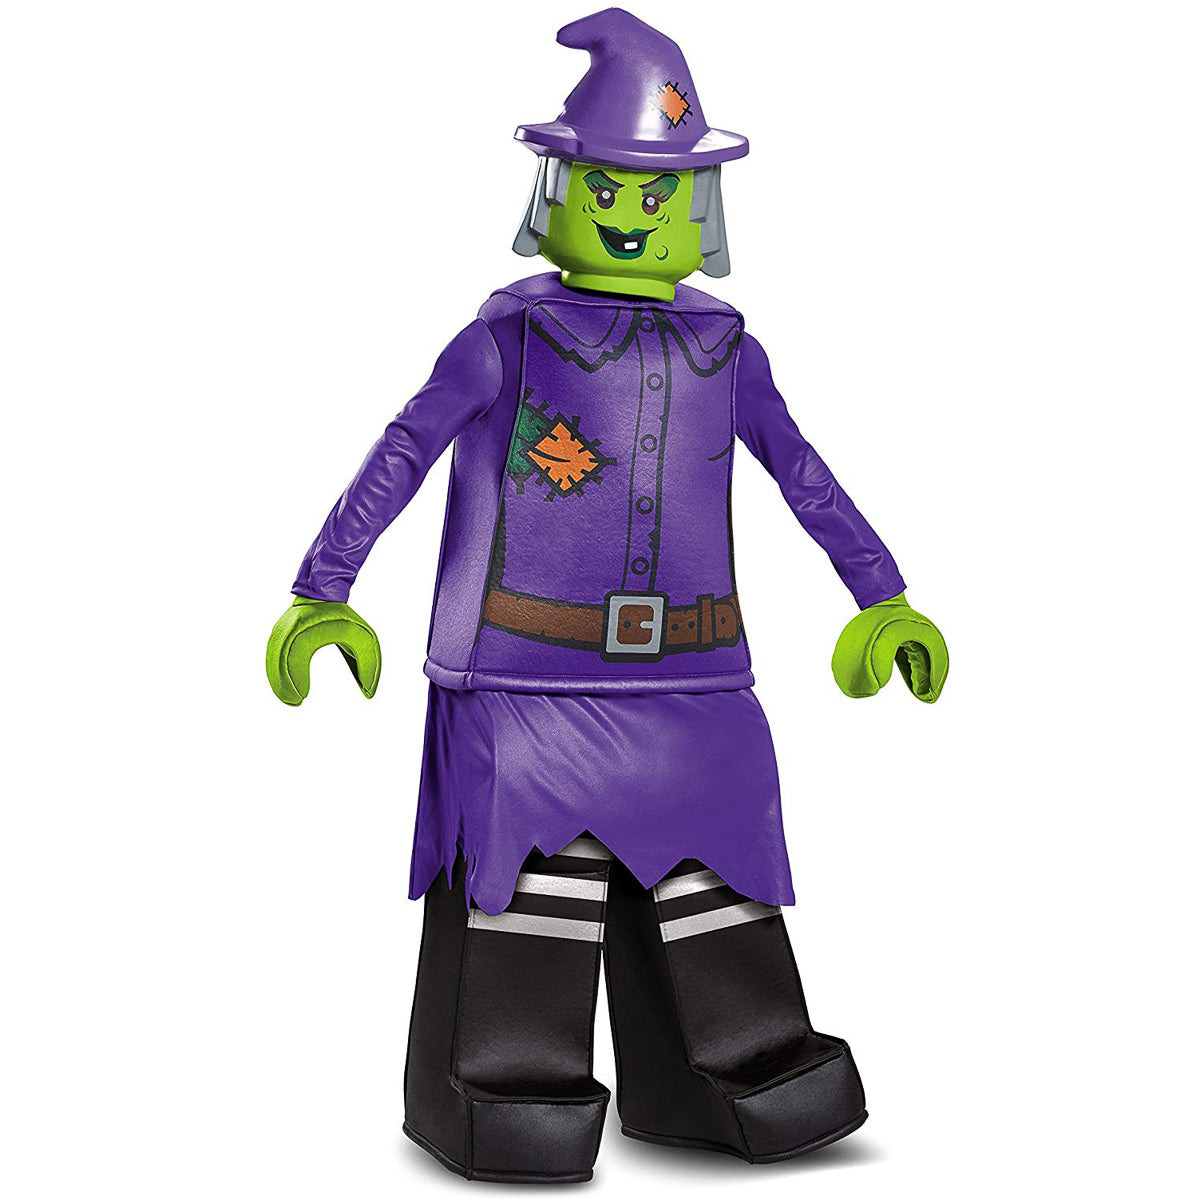 LEGO Prestige Halloween Costume – Complete Minifigure Outfit